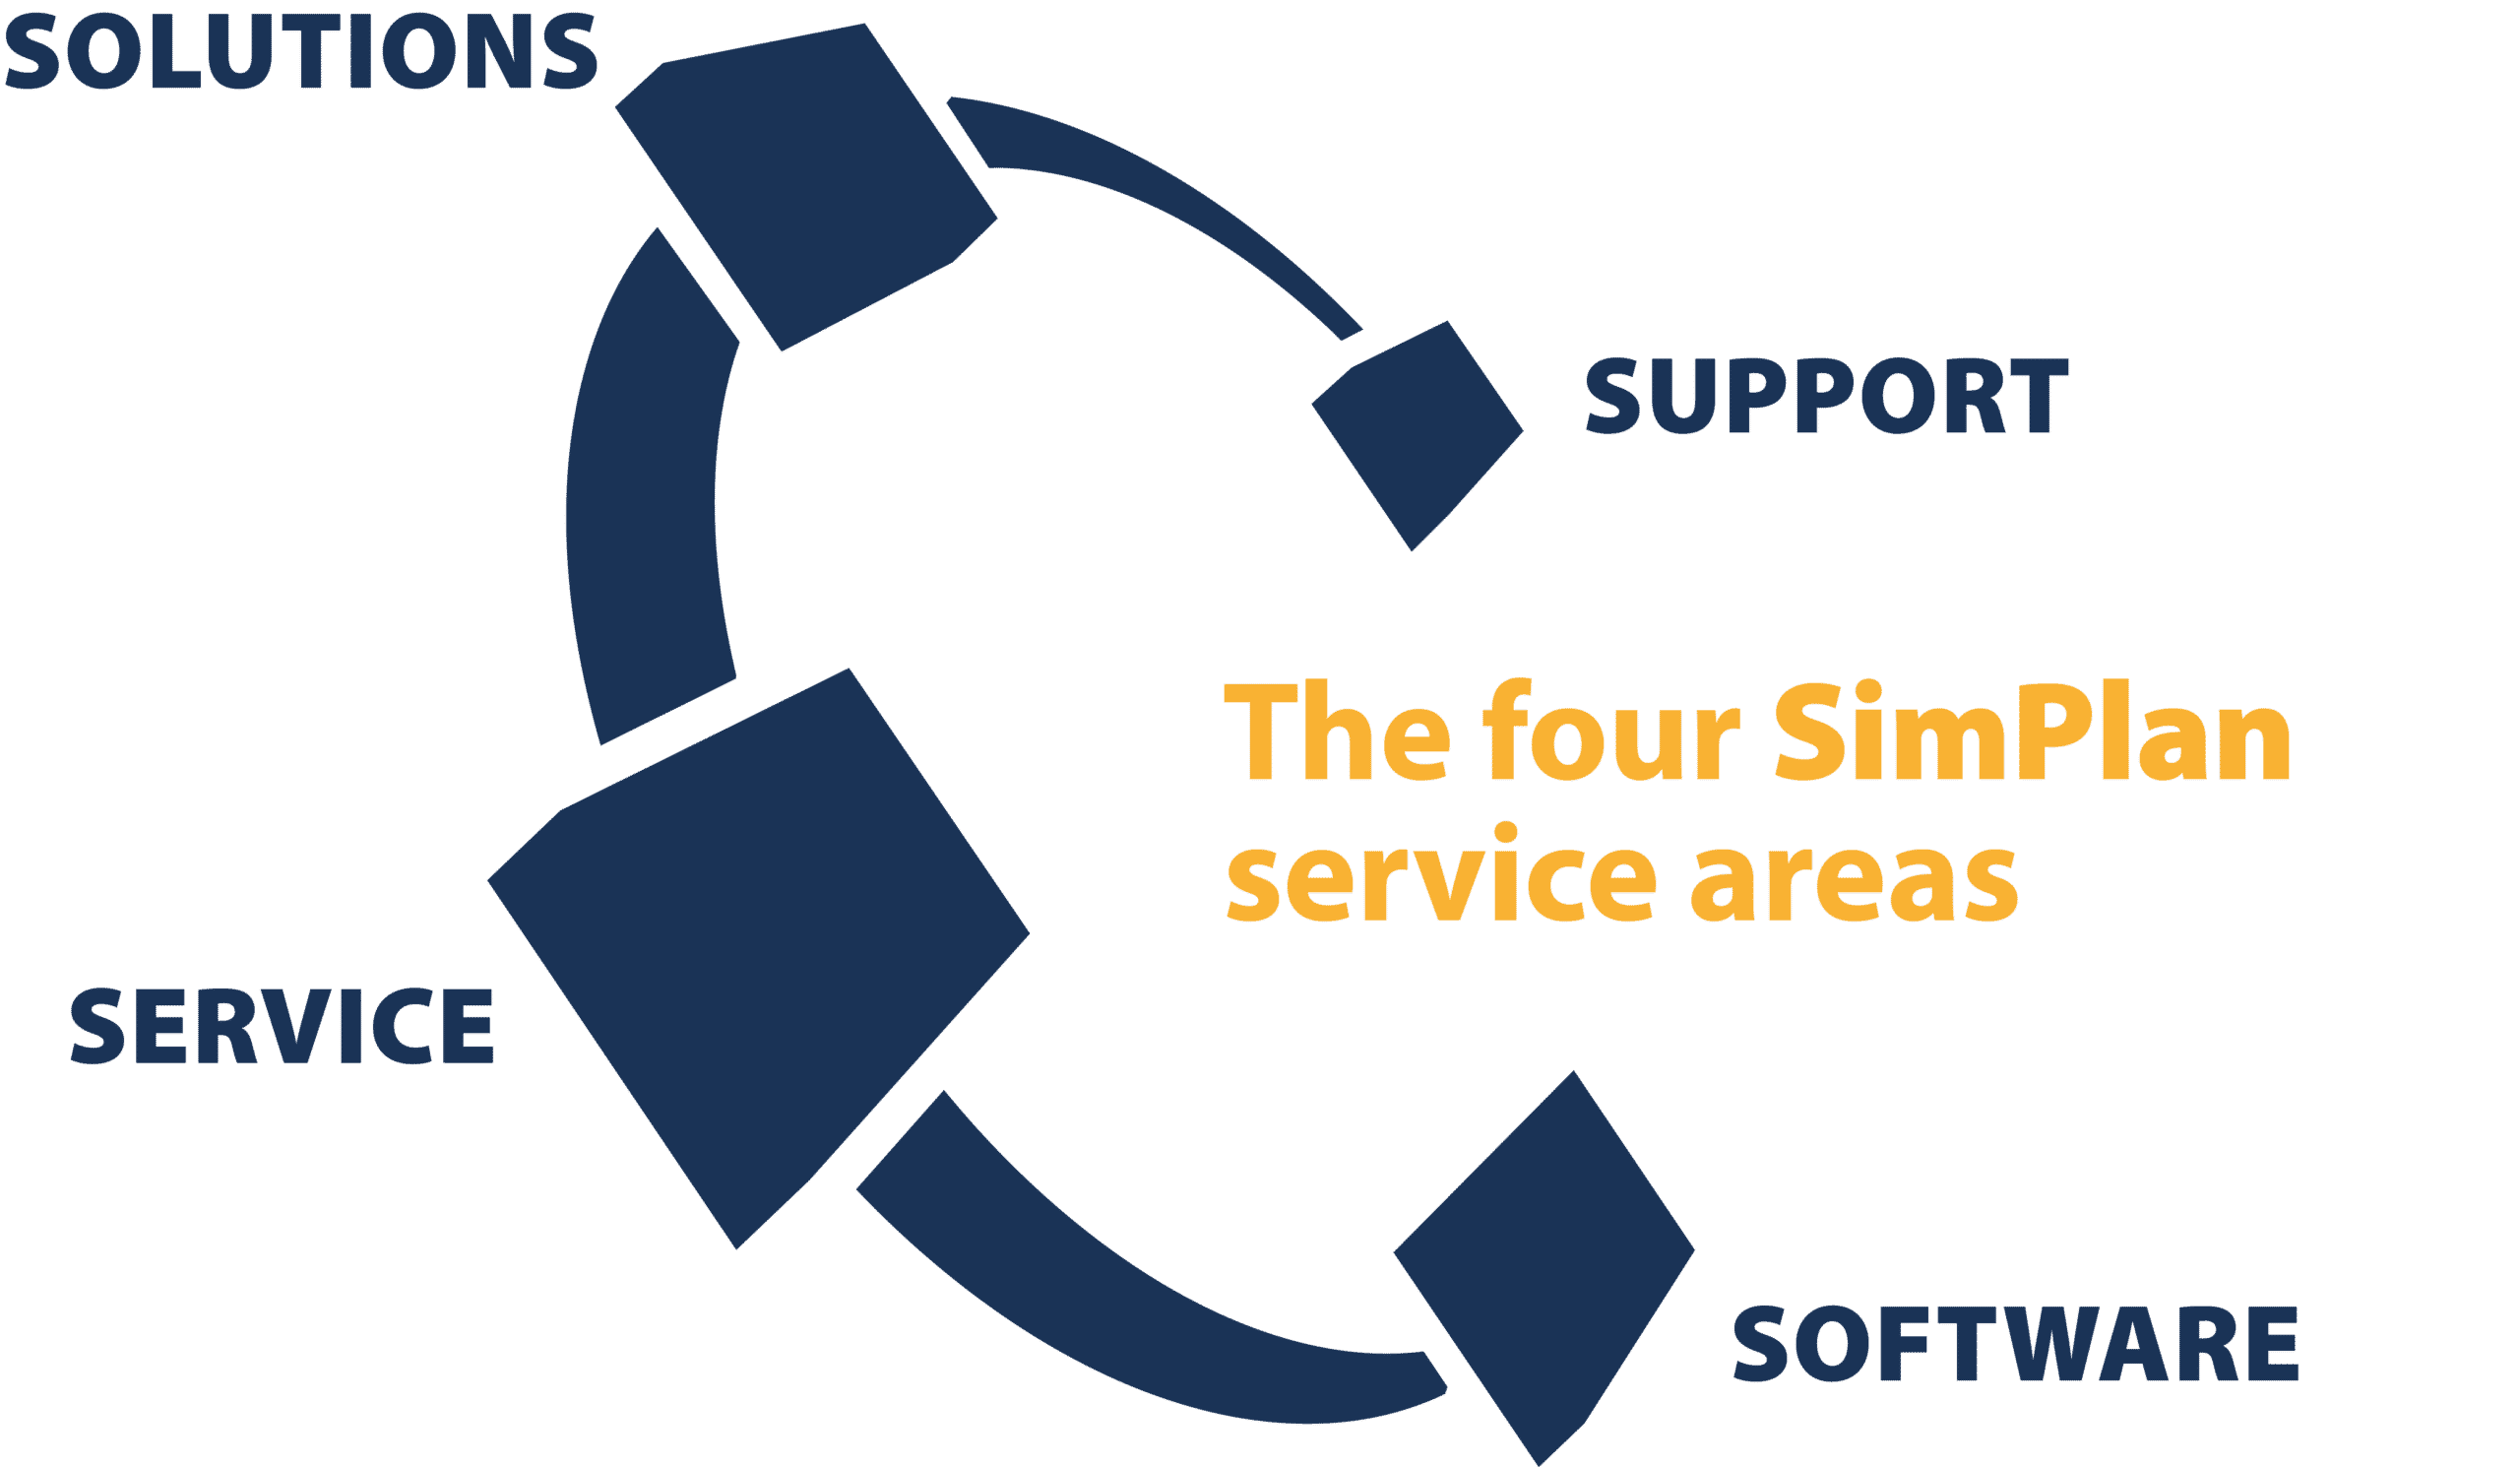 SimPlan Services